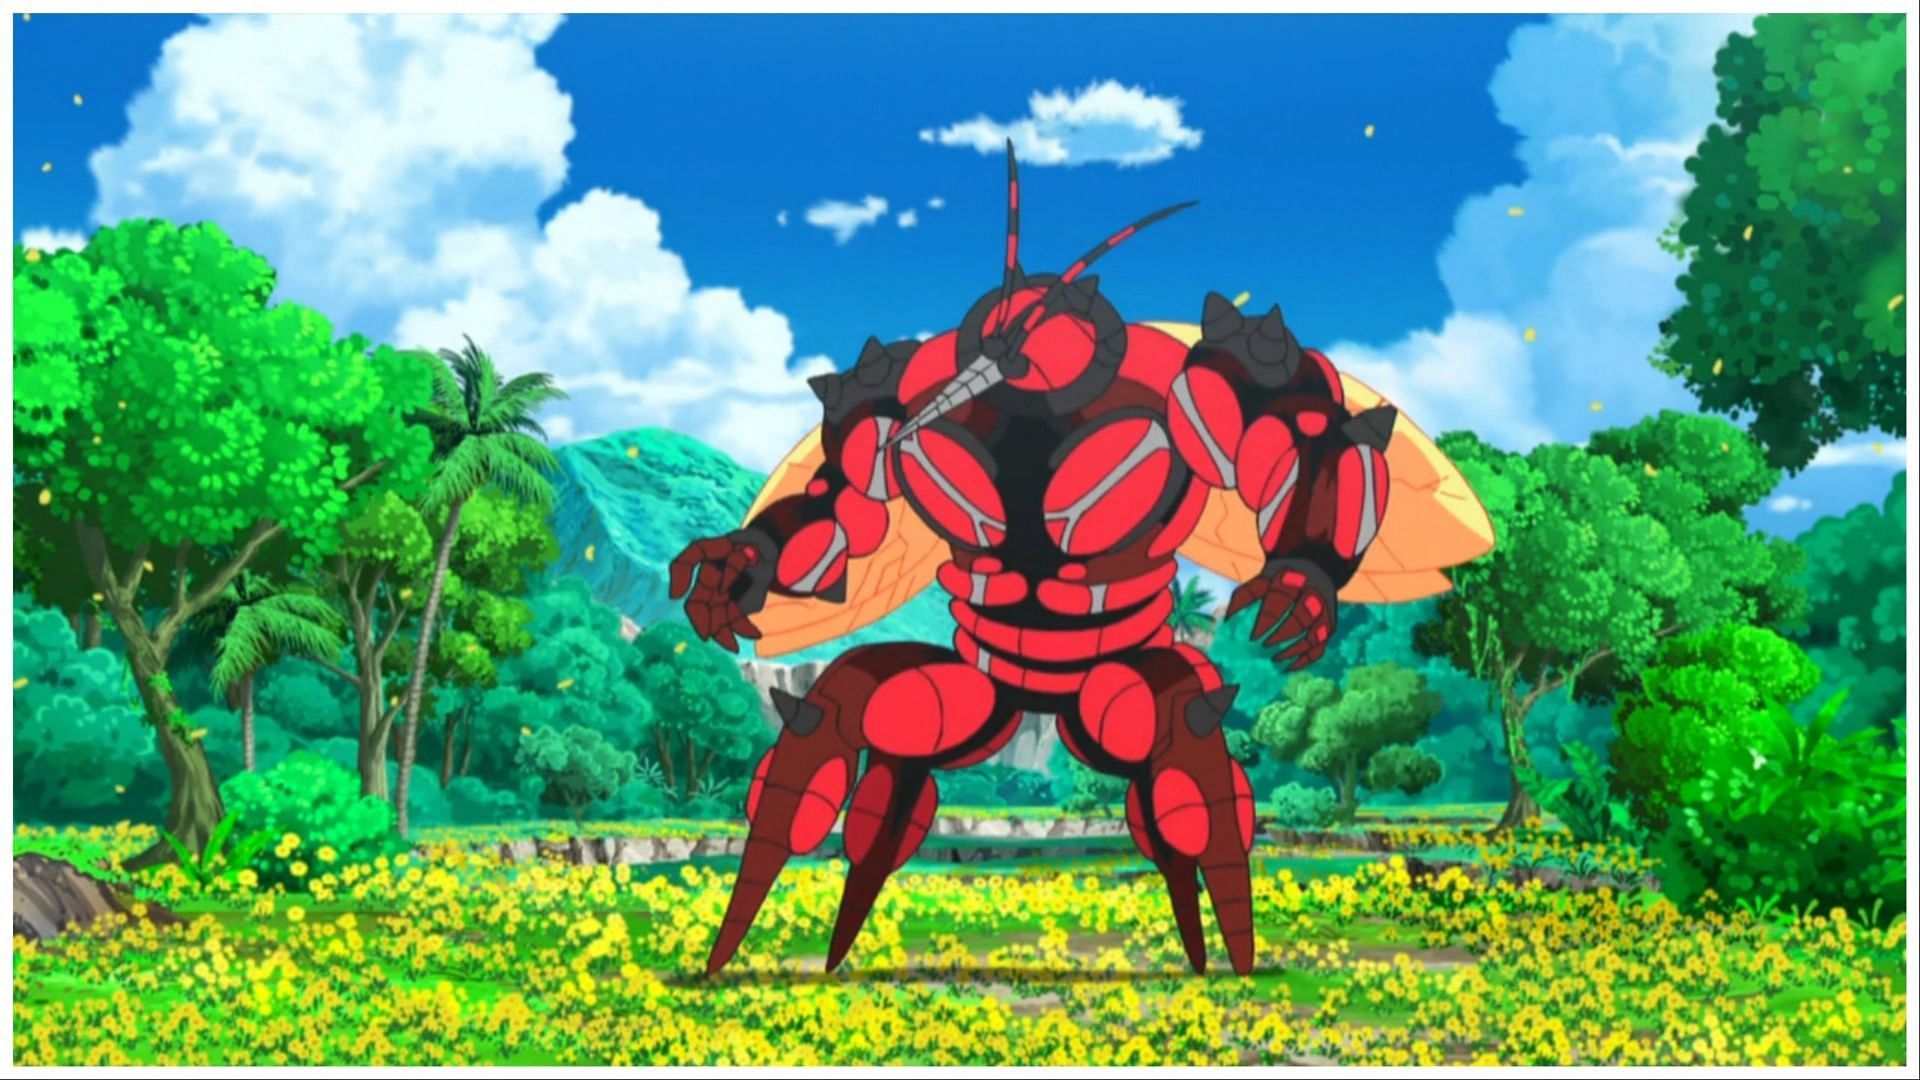 Buzzwole, as seen in the Pokemon anime (Image via The Pokemon Company)